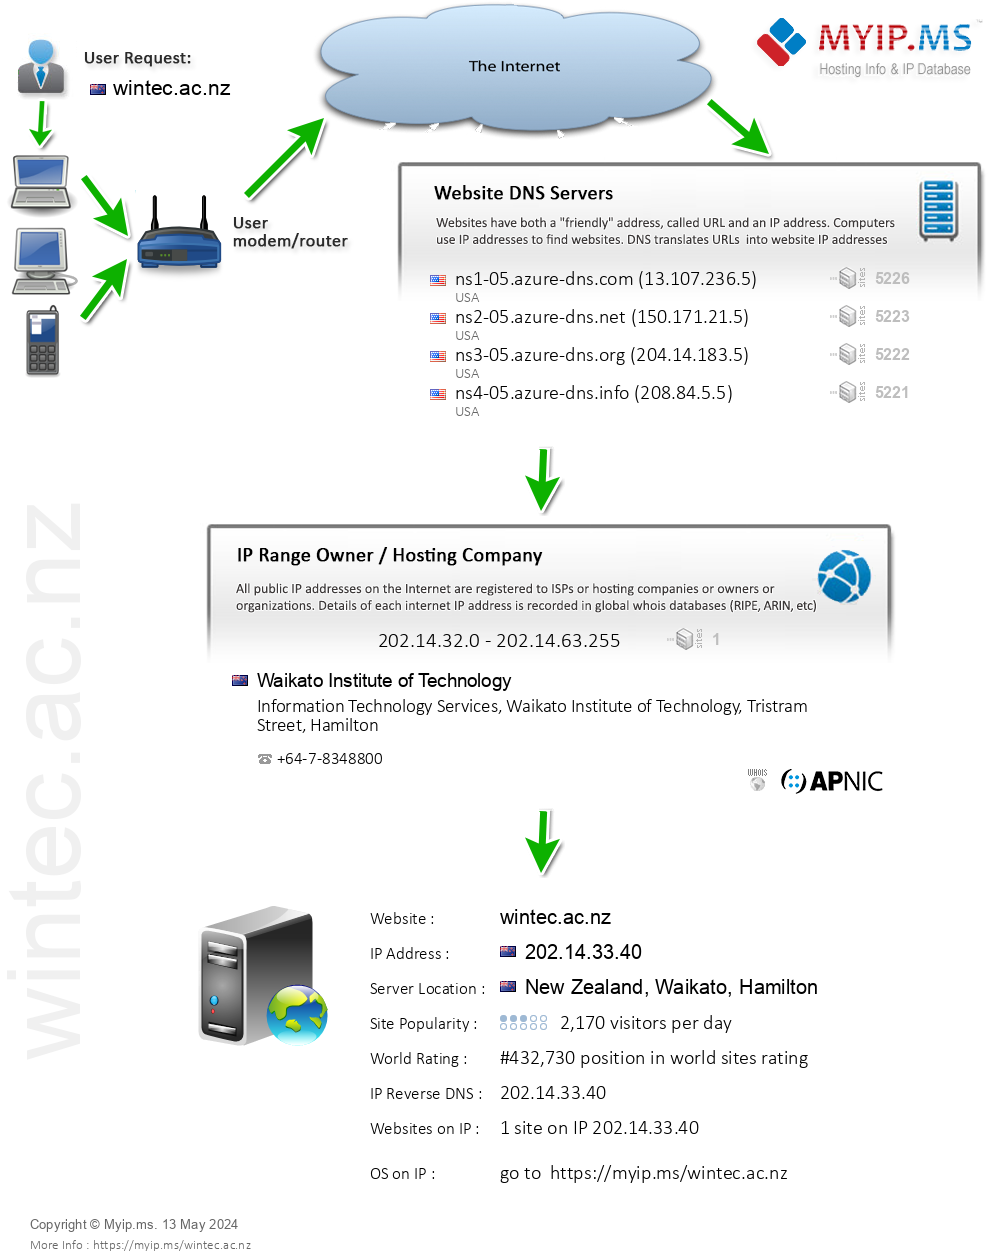 Wintec.ac.nz - Website Hosting Visual IP Diagram